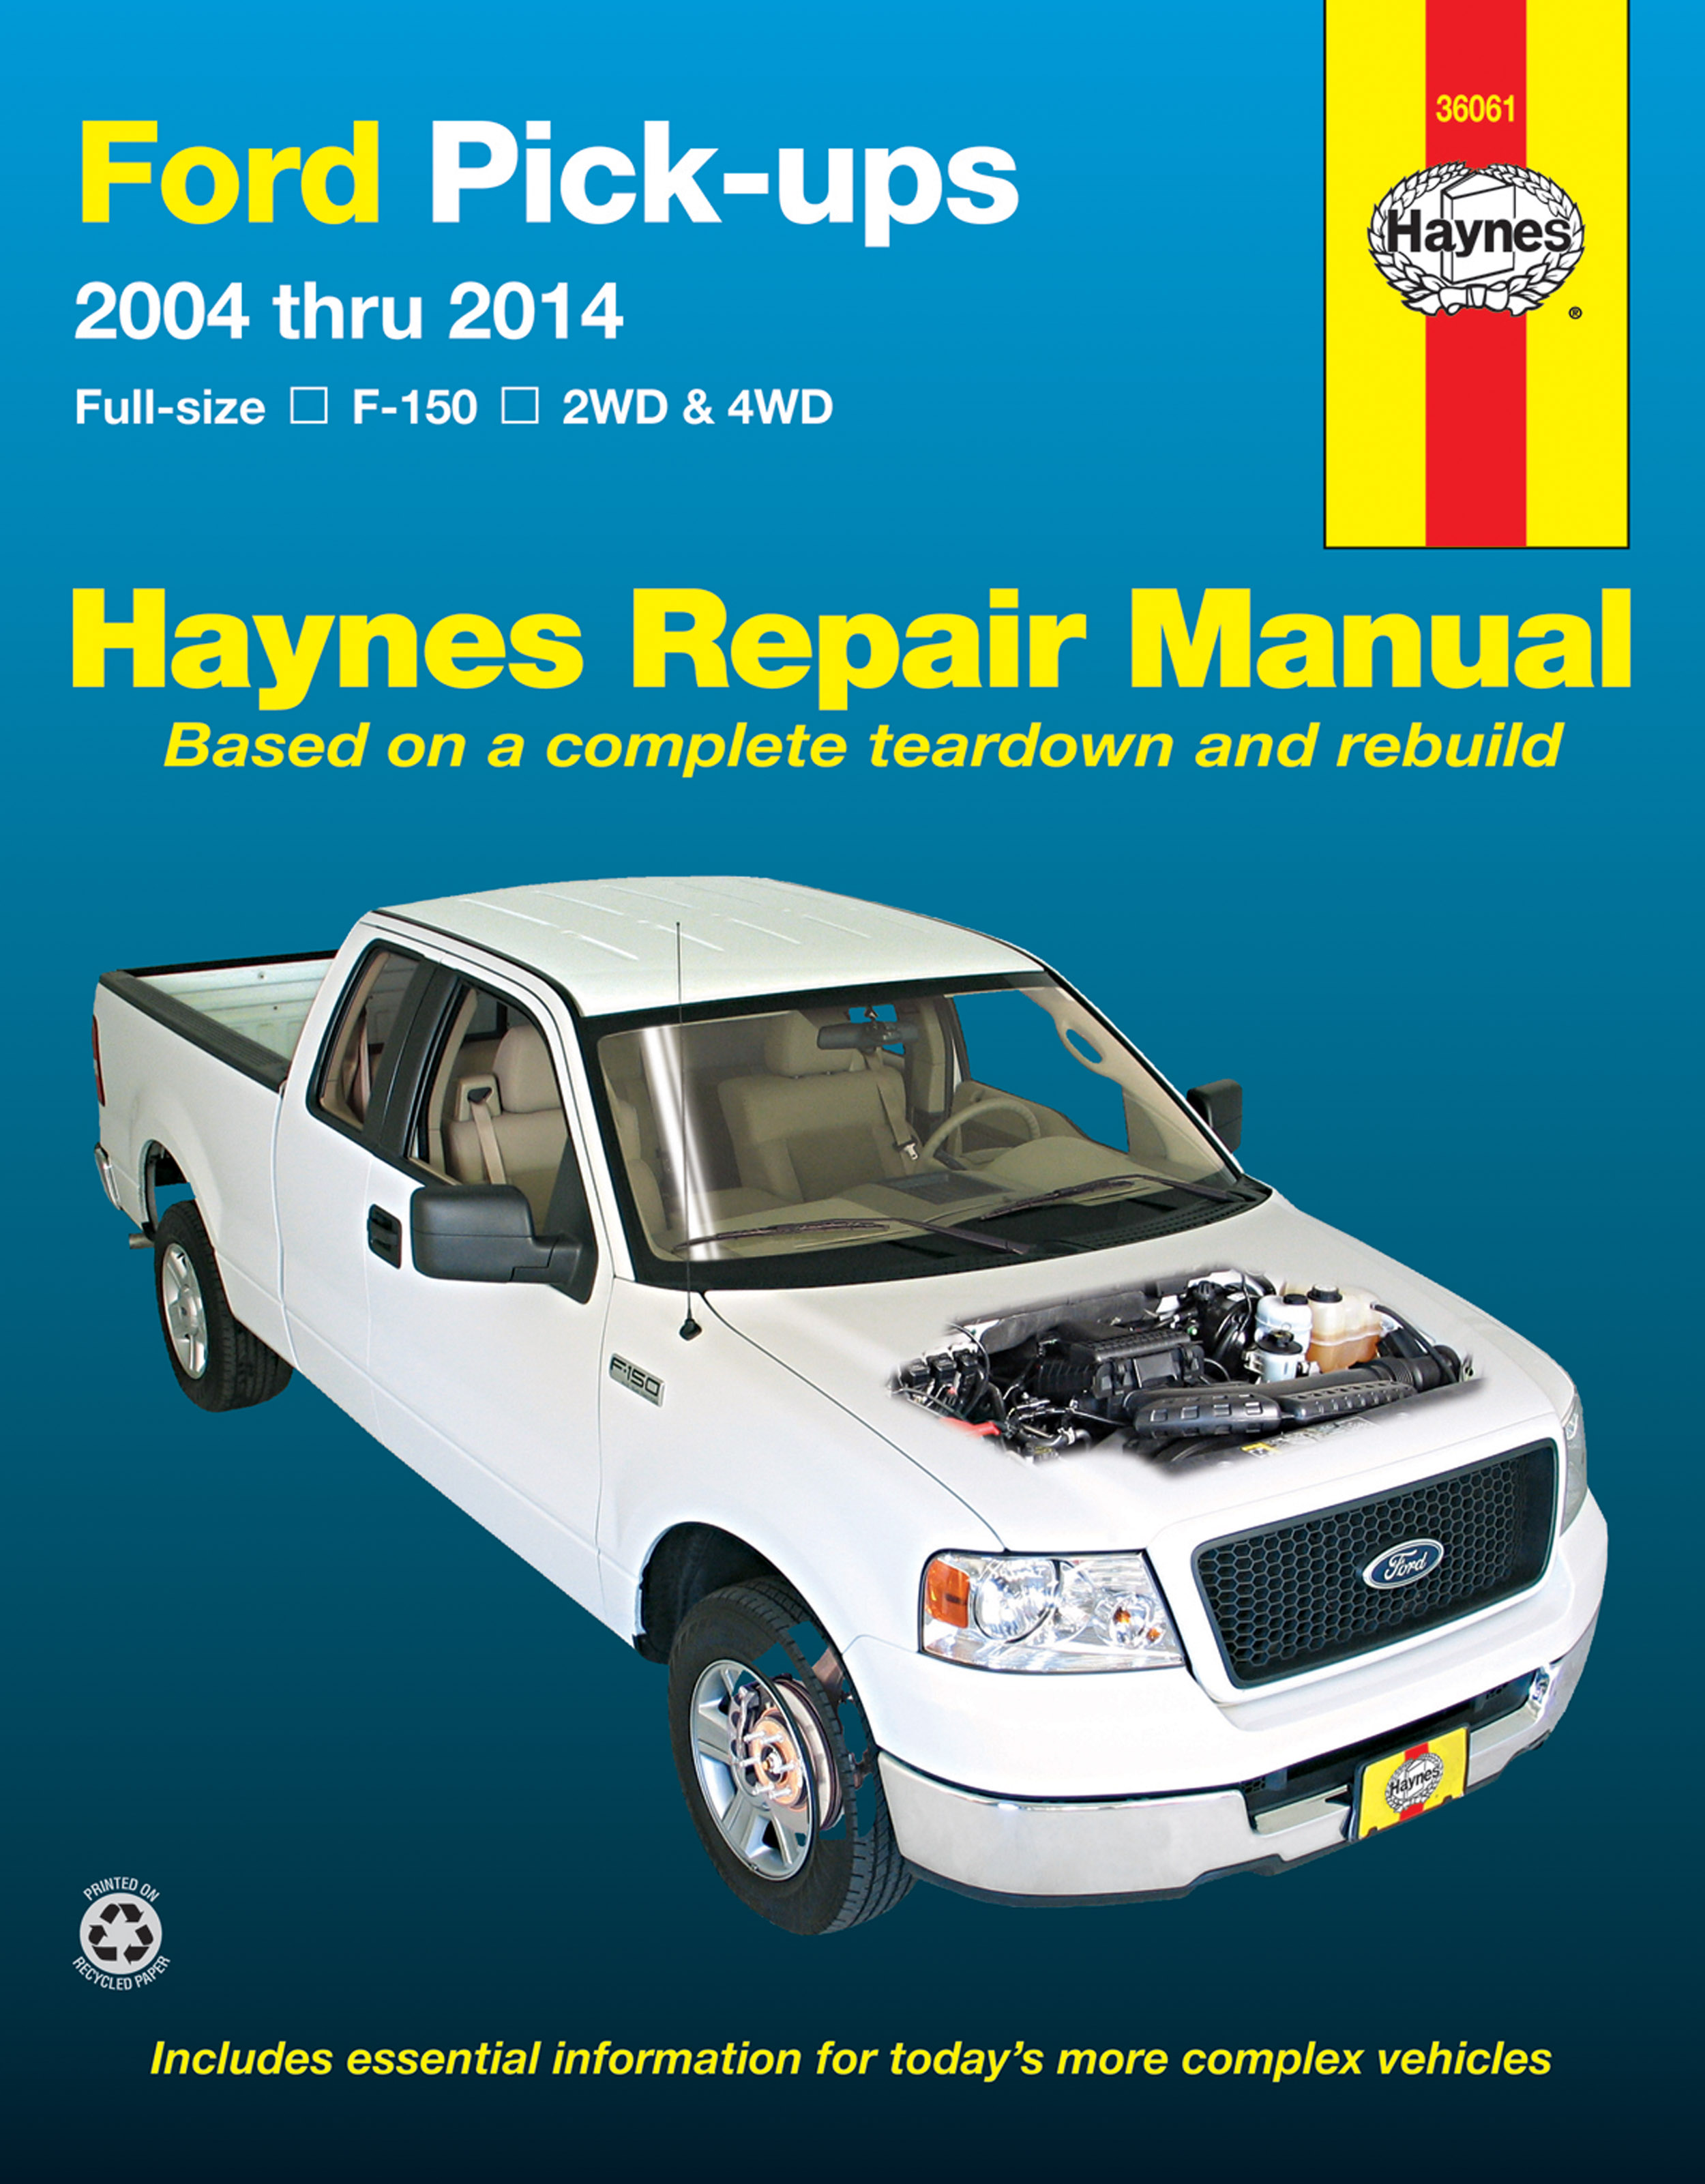 2005 Ford F-150 Truck Shop Service Repair Manual CD Engine Drivetrain Electrical 